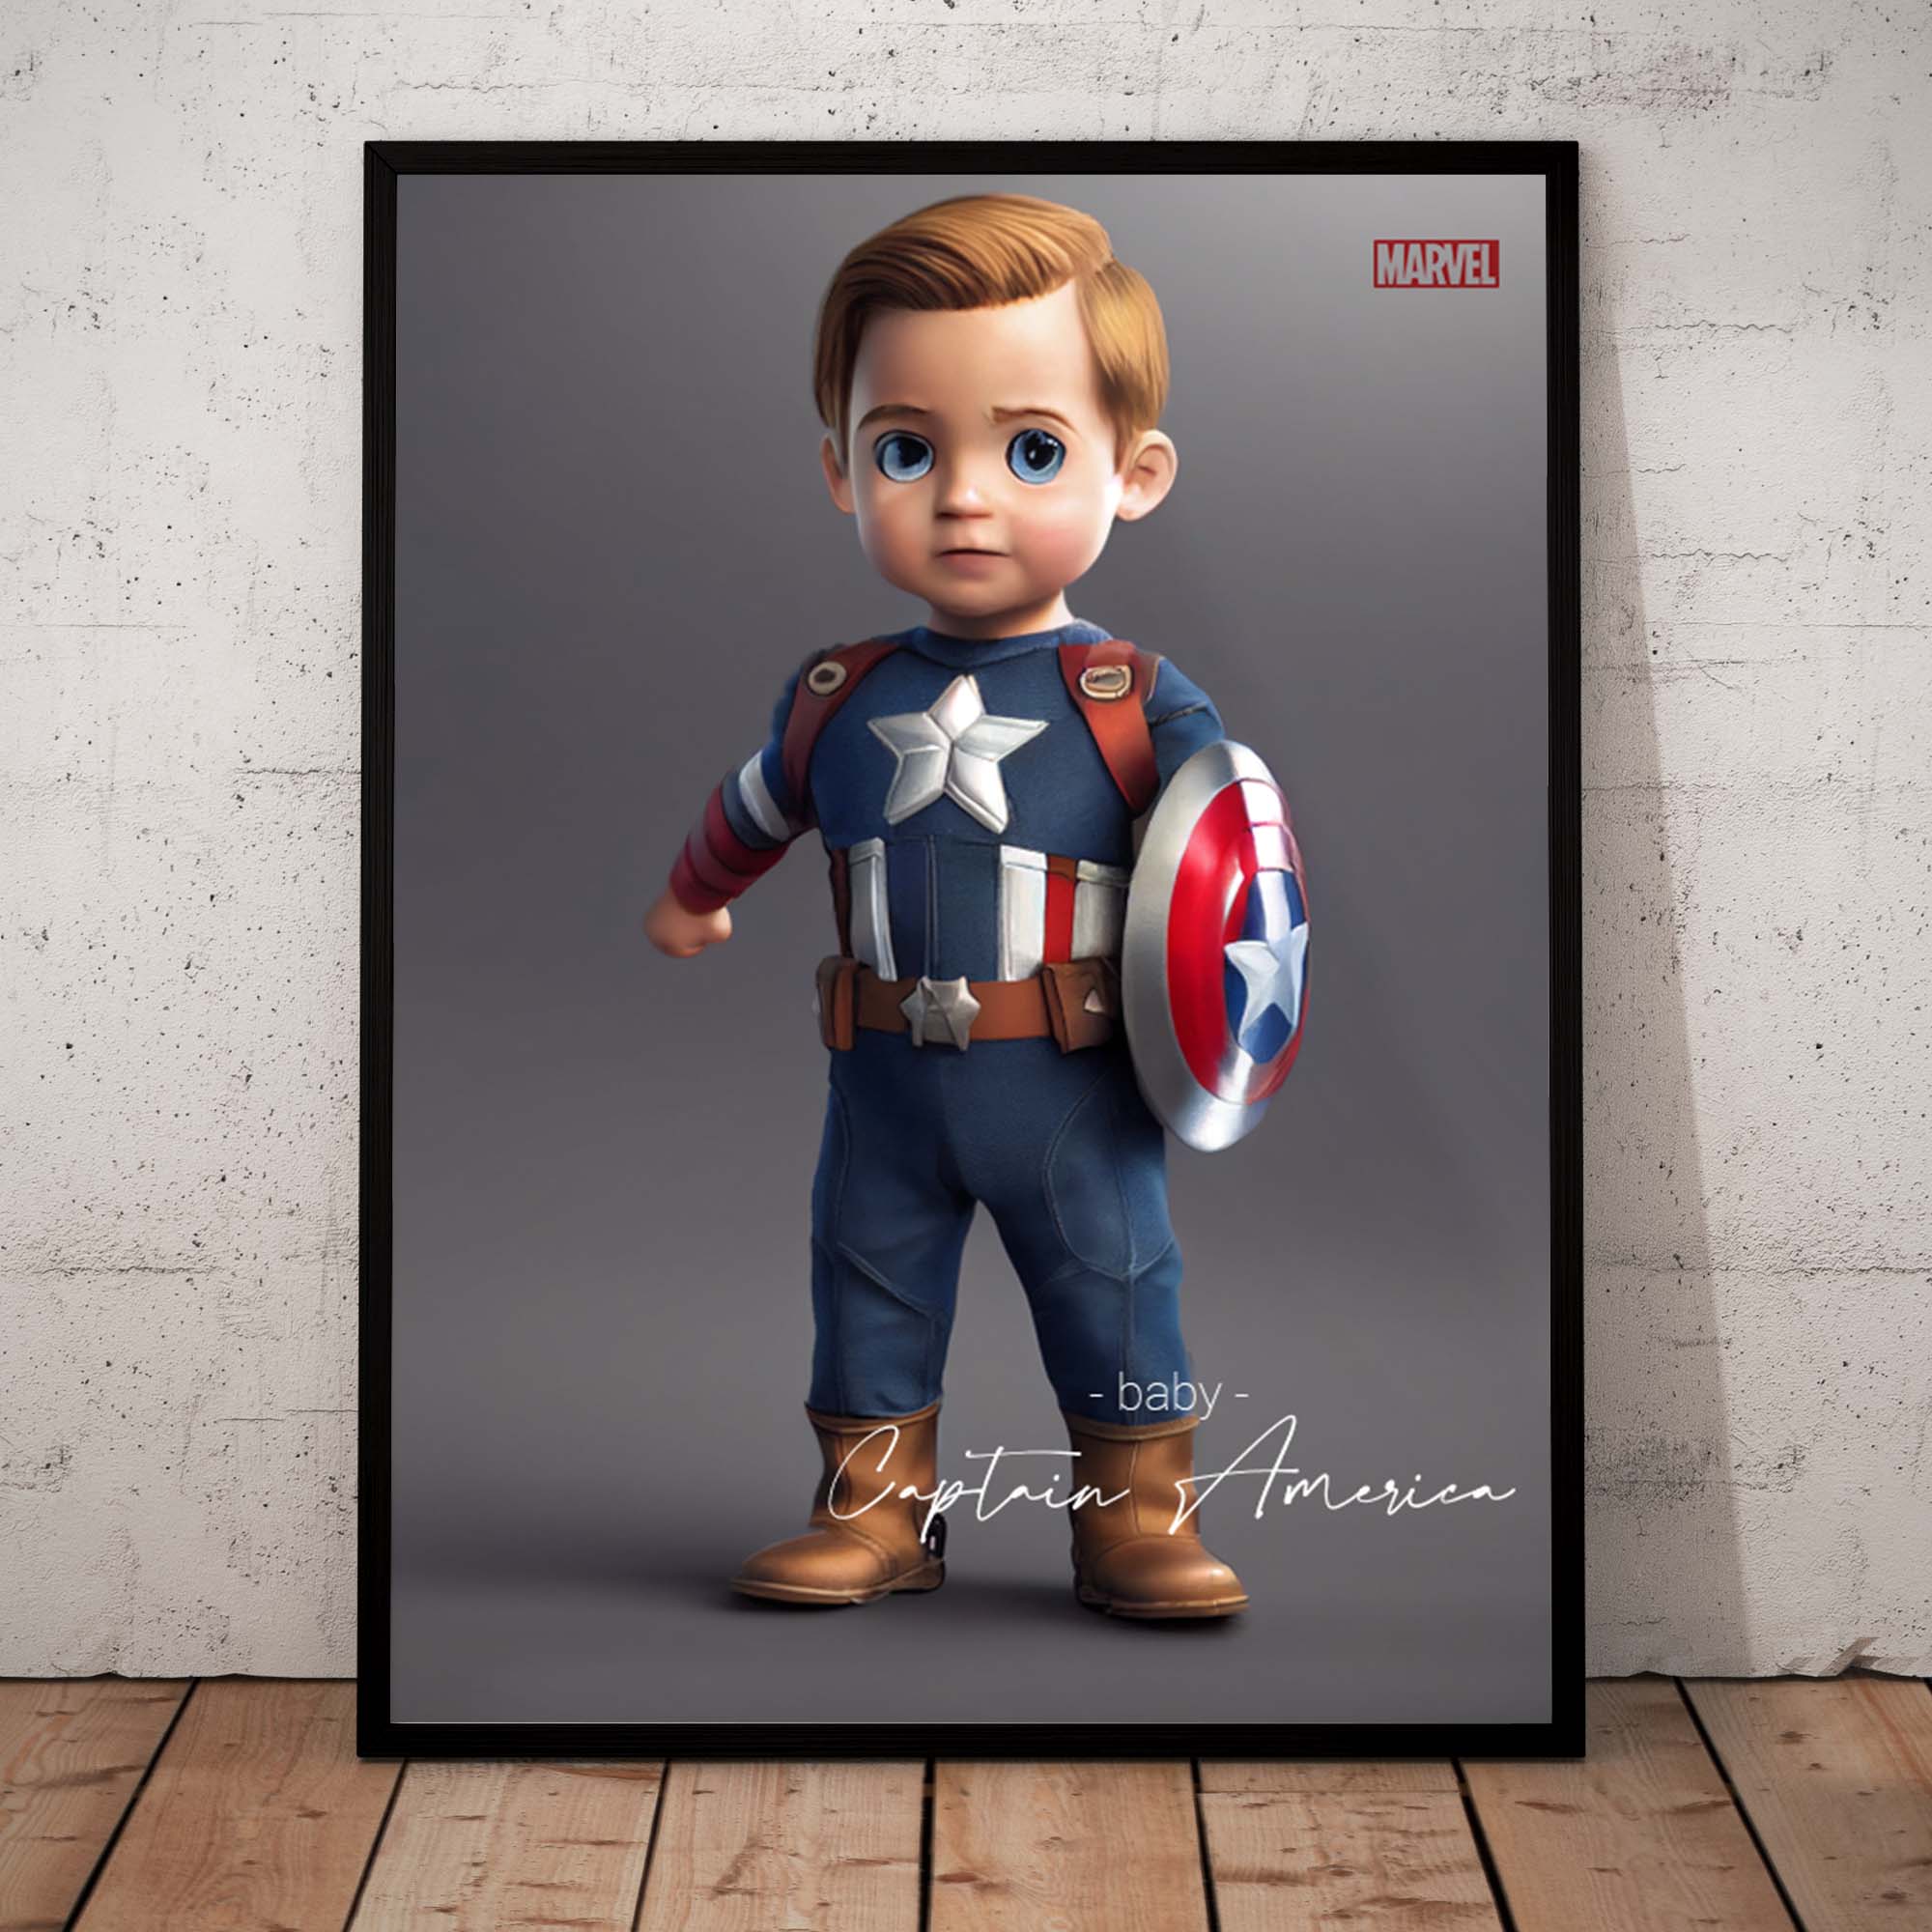 Captain Marvel - Poster in frame front